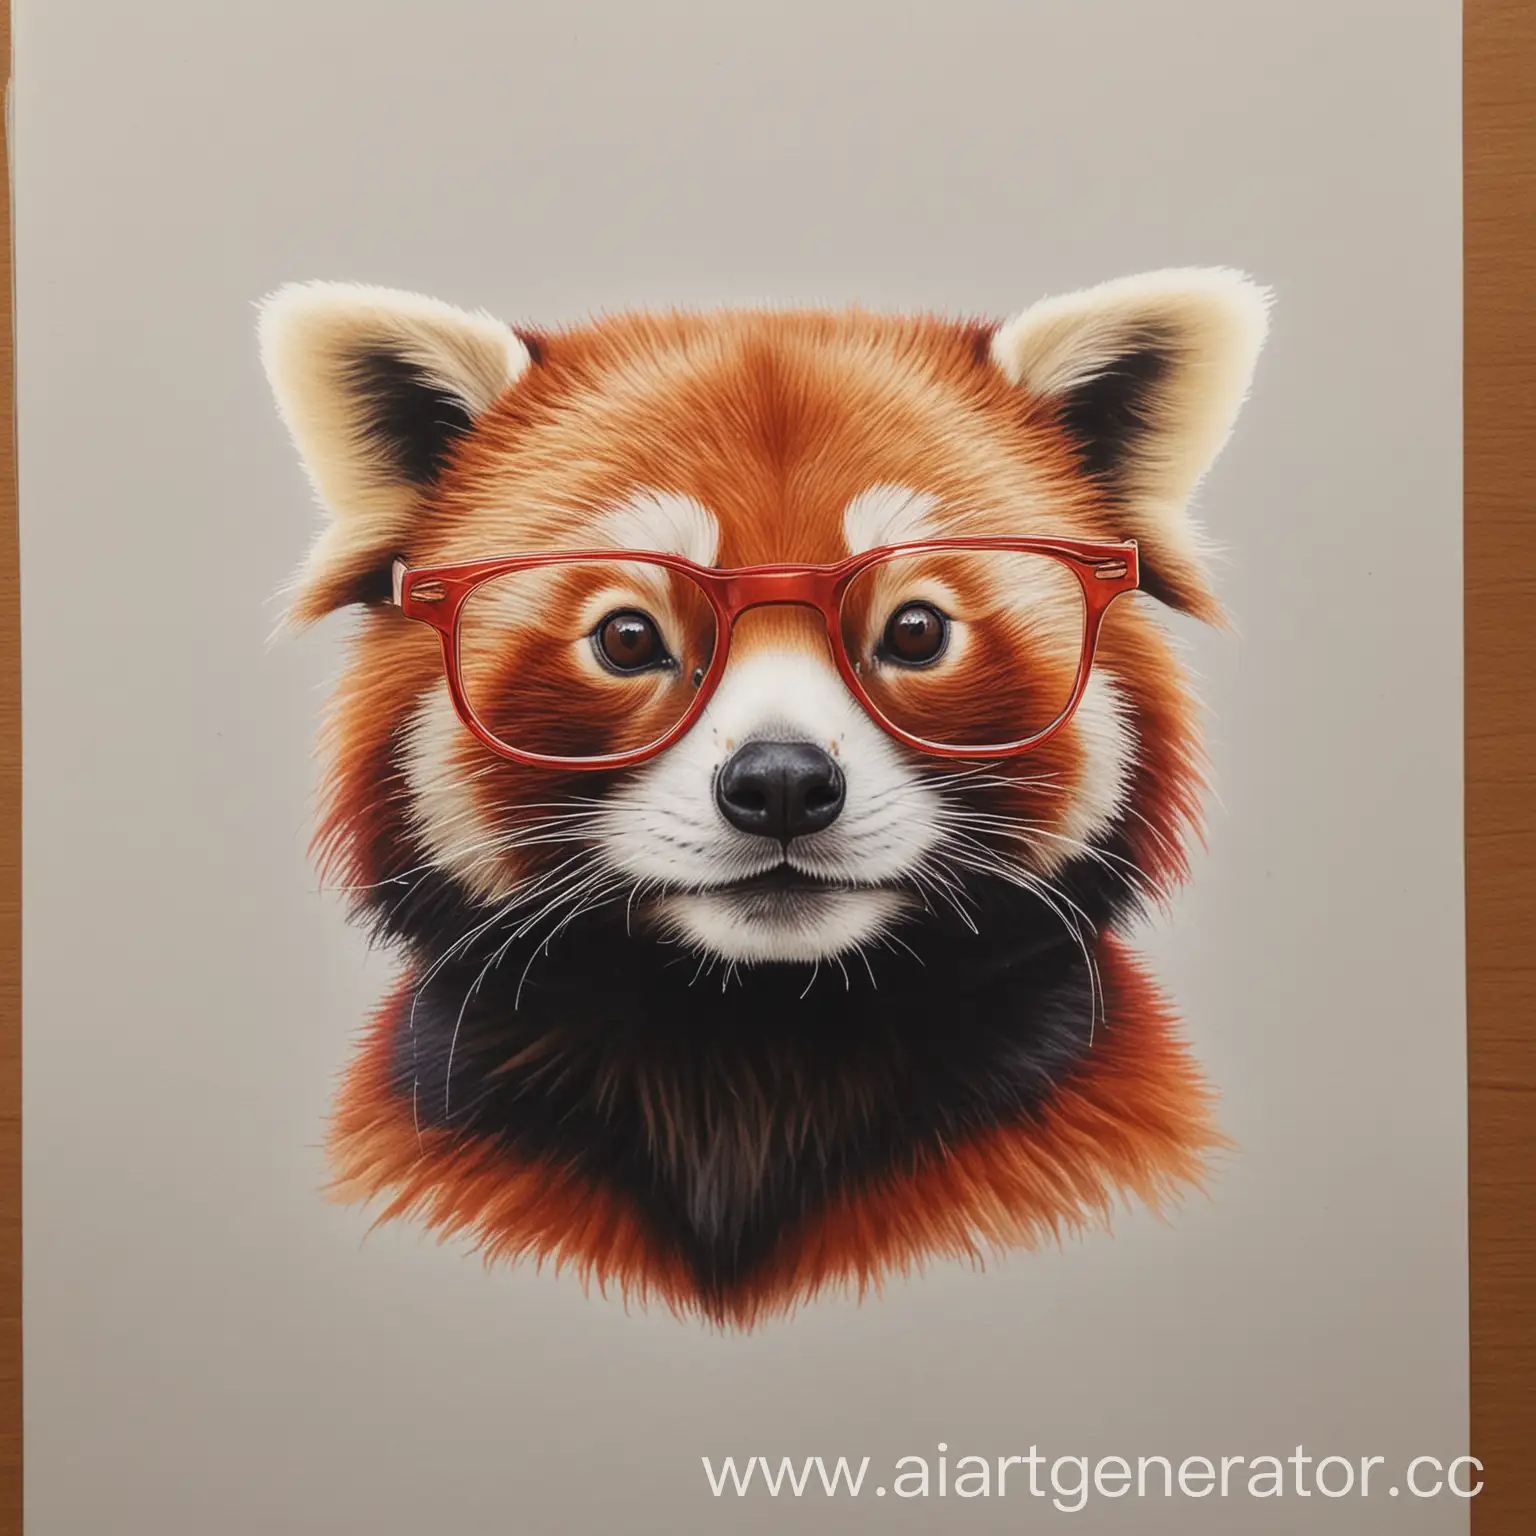 Cute-Red-Panda-Wearing-Glasses-Illustration